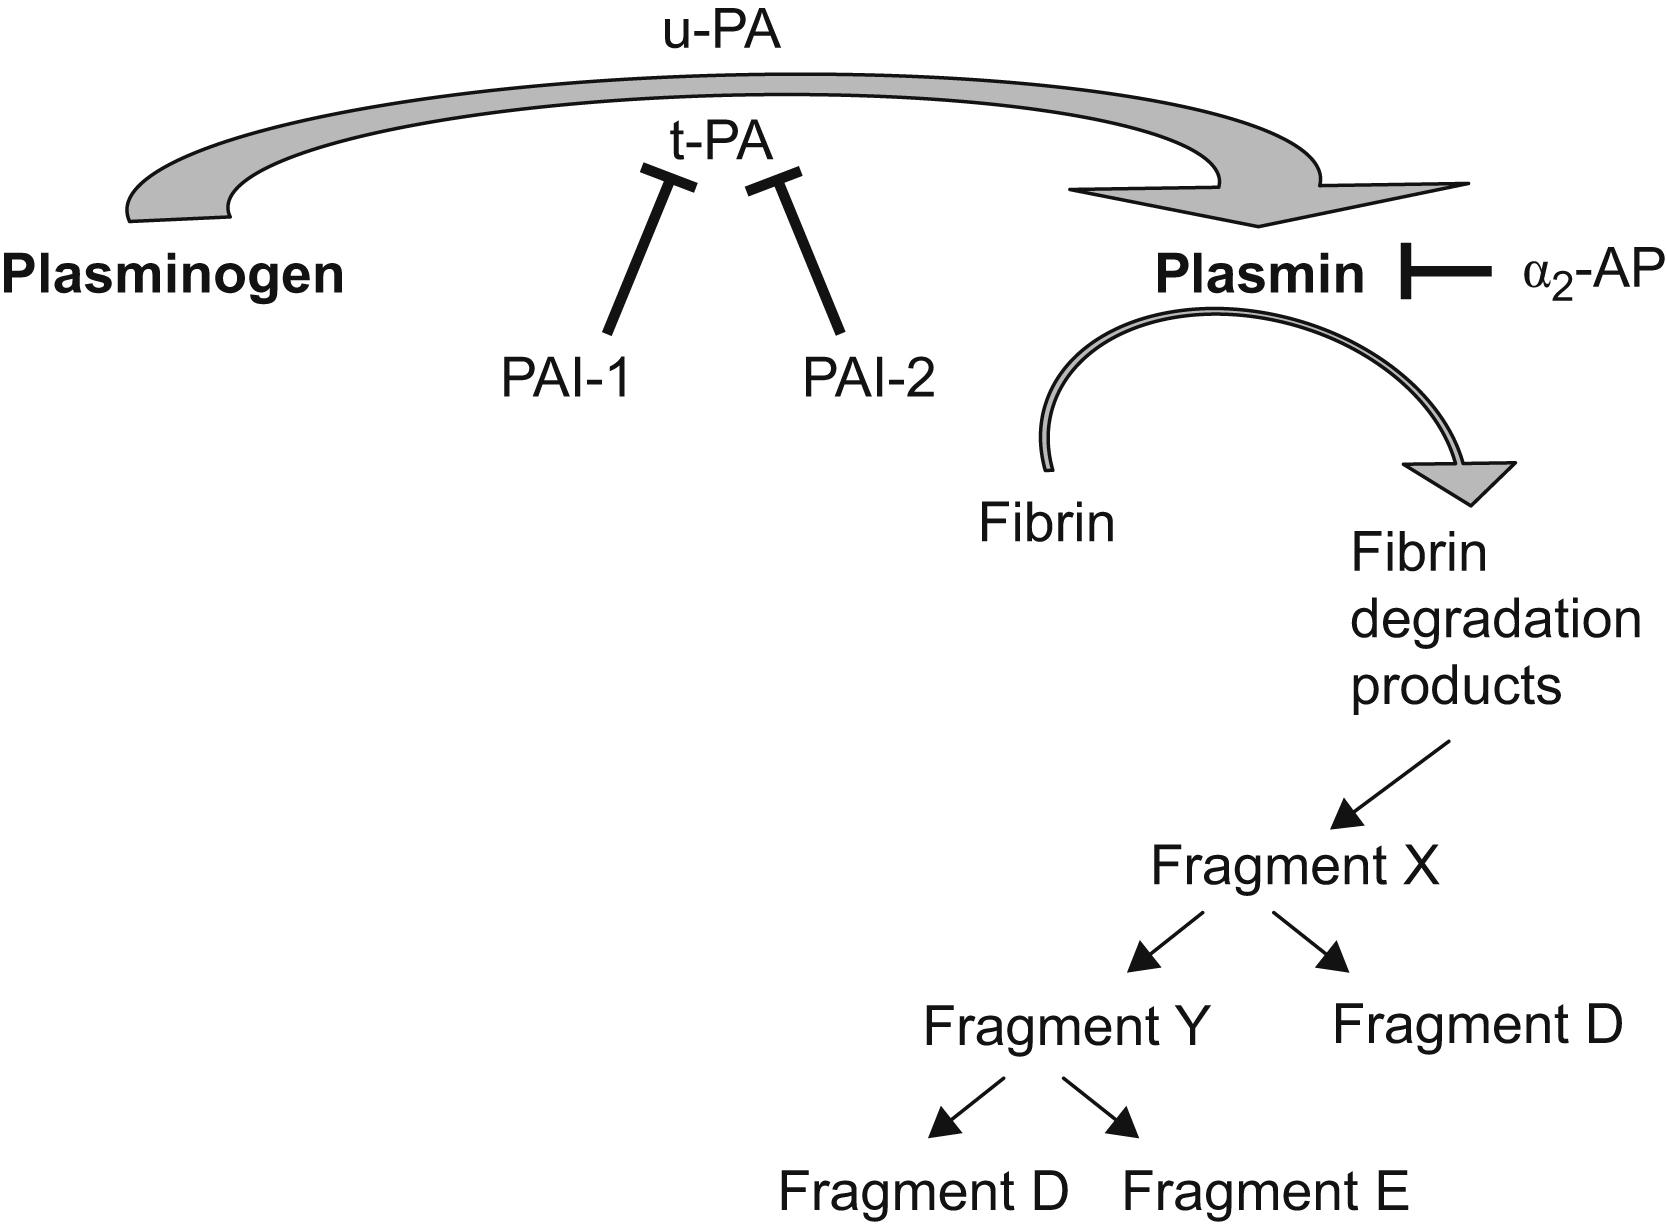 Figure 13.2, The fibrinolytic pathway. Plasminogen is converted enzymatically to plasmin by t-PA or by u-PA. Plasmin cleaves fibrin and fibrinogen into fibrin degradation products. Major inhibitors of the fibrinolytic pathway are depicted. PAI-1 and PAI-2 inhibit t-PA. Plasmin activity is inhibited by a2-AP. Abbreviations: t-PA , tissue plasminogen activator; u-PA , urokinase; PAI-1 , plasminogen activator inhibitor 1; PAI-2 , plasminogen activator inhibitor 2; a2-AP , alpha 2 anti-plasmin. (T=inhibition).